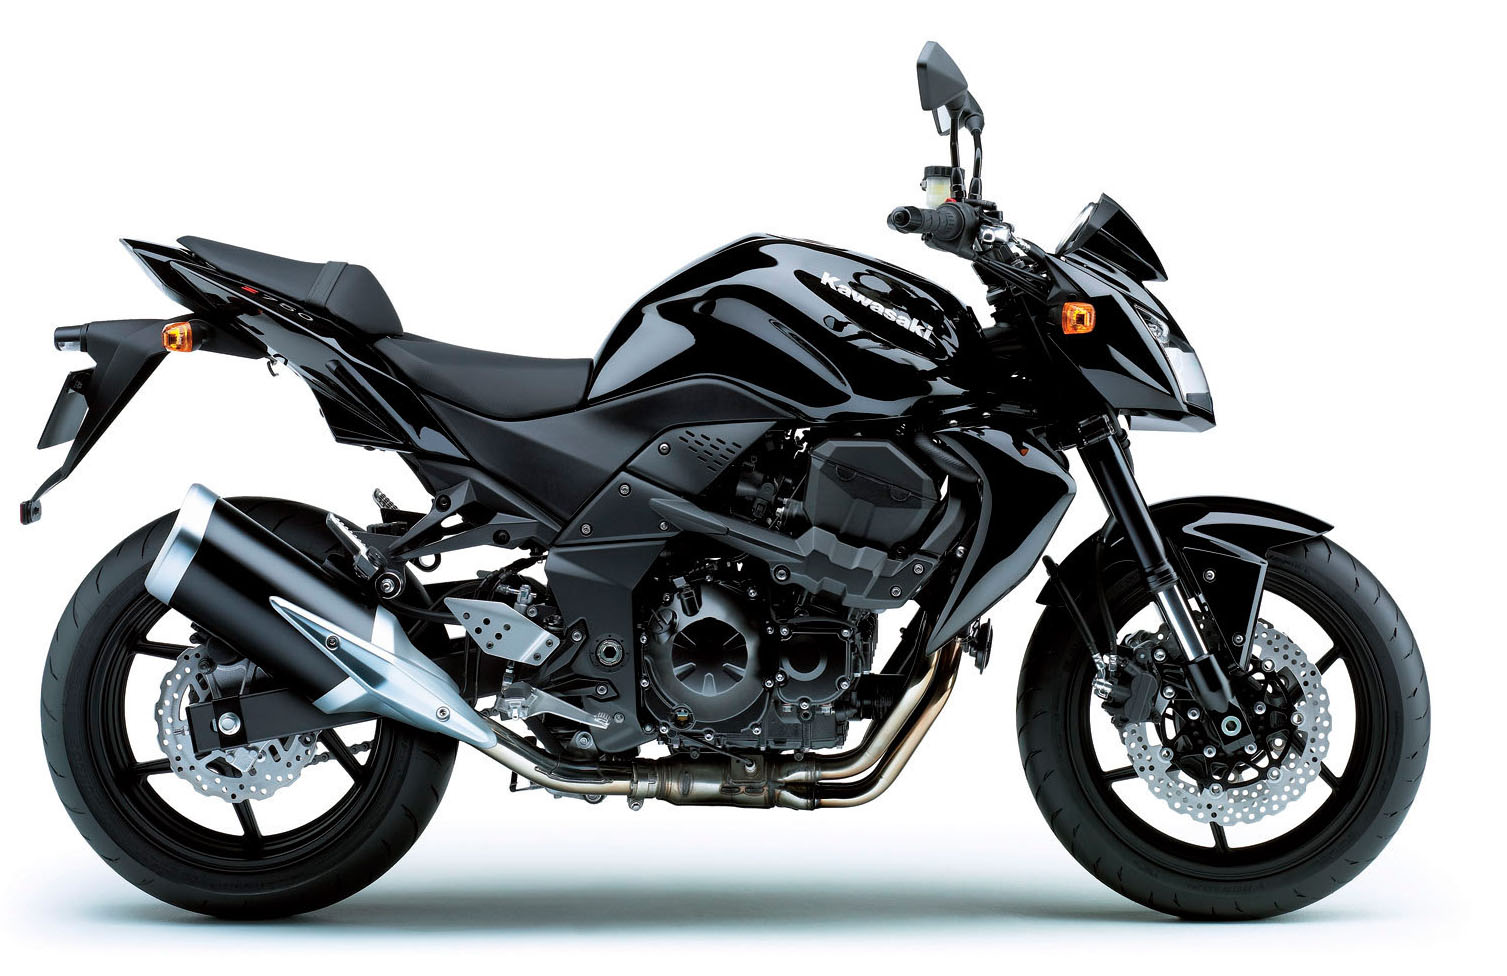 https://www.motorcyclespecs.co.za/Gallery%20B/Kawasaki%20Z750%2007%20%201.jpg